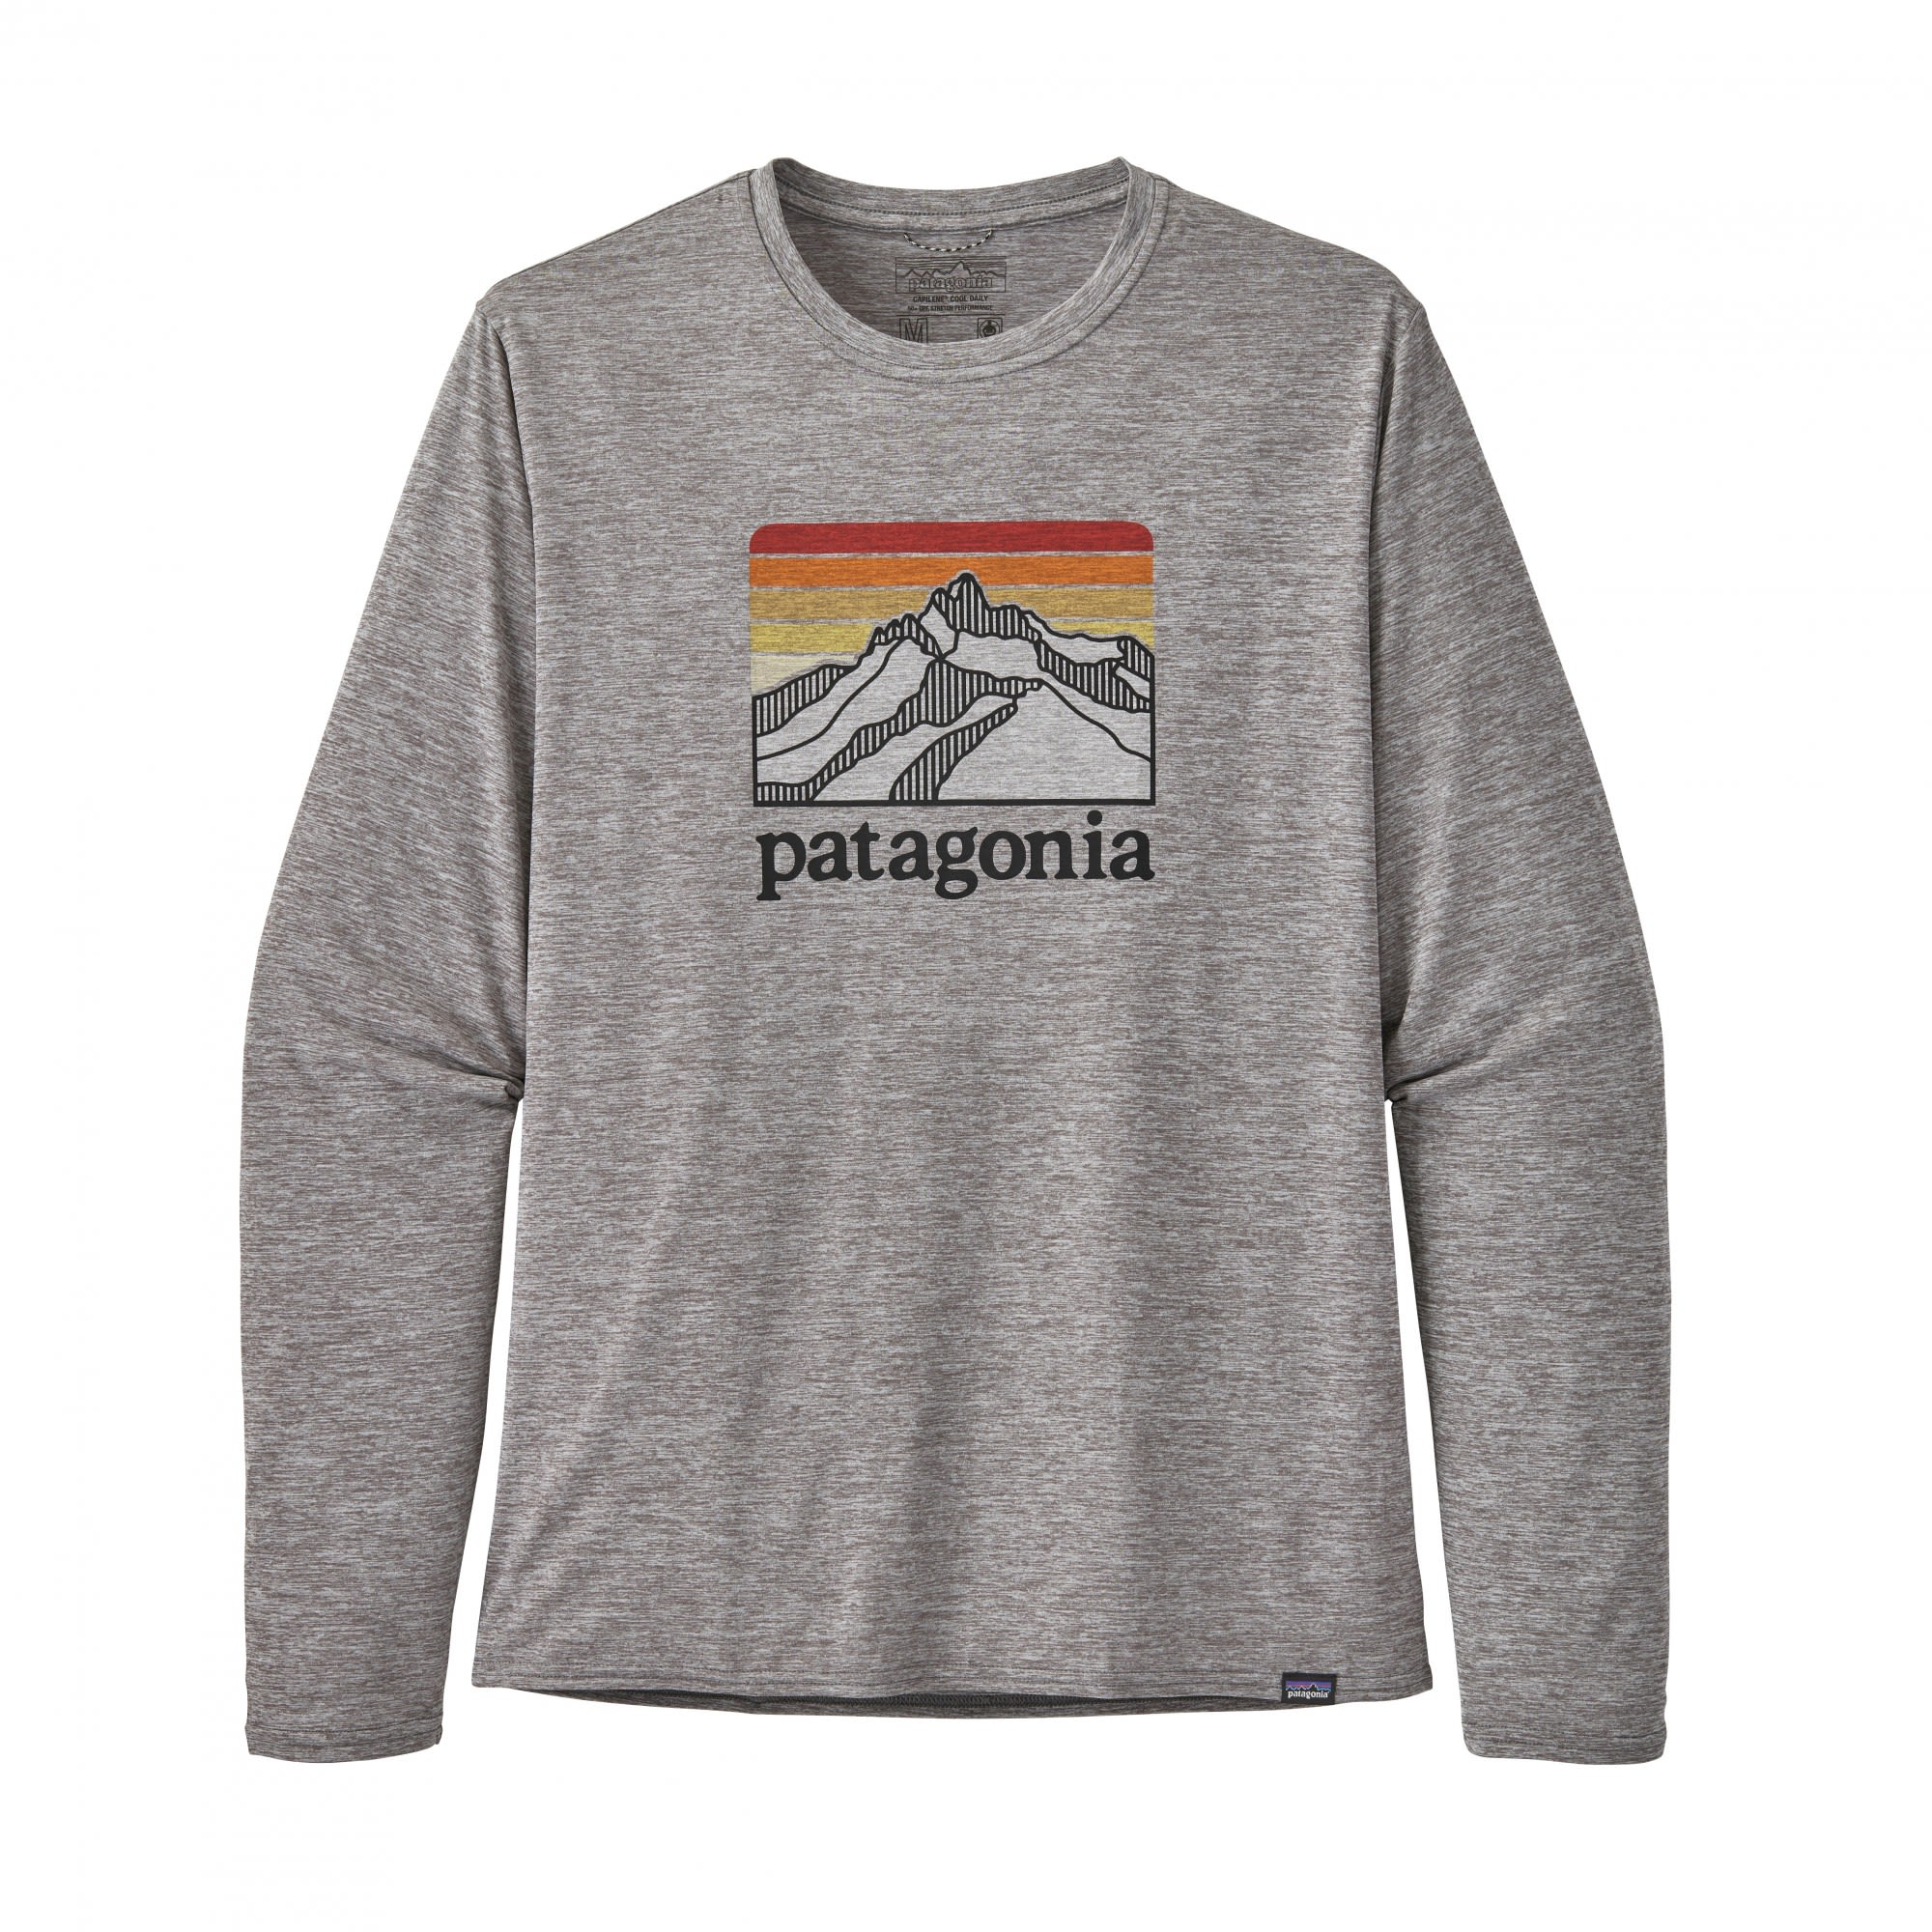 Patagonia Long-Sleeved